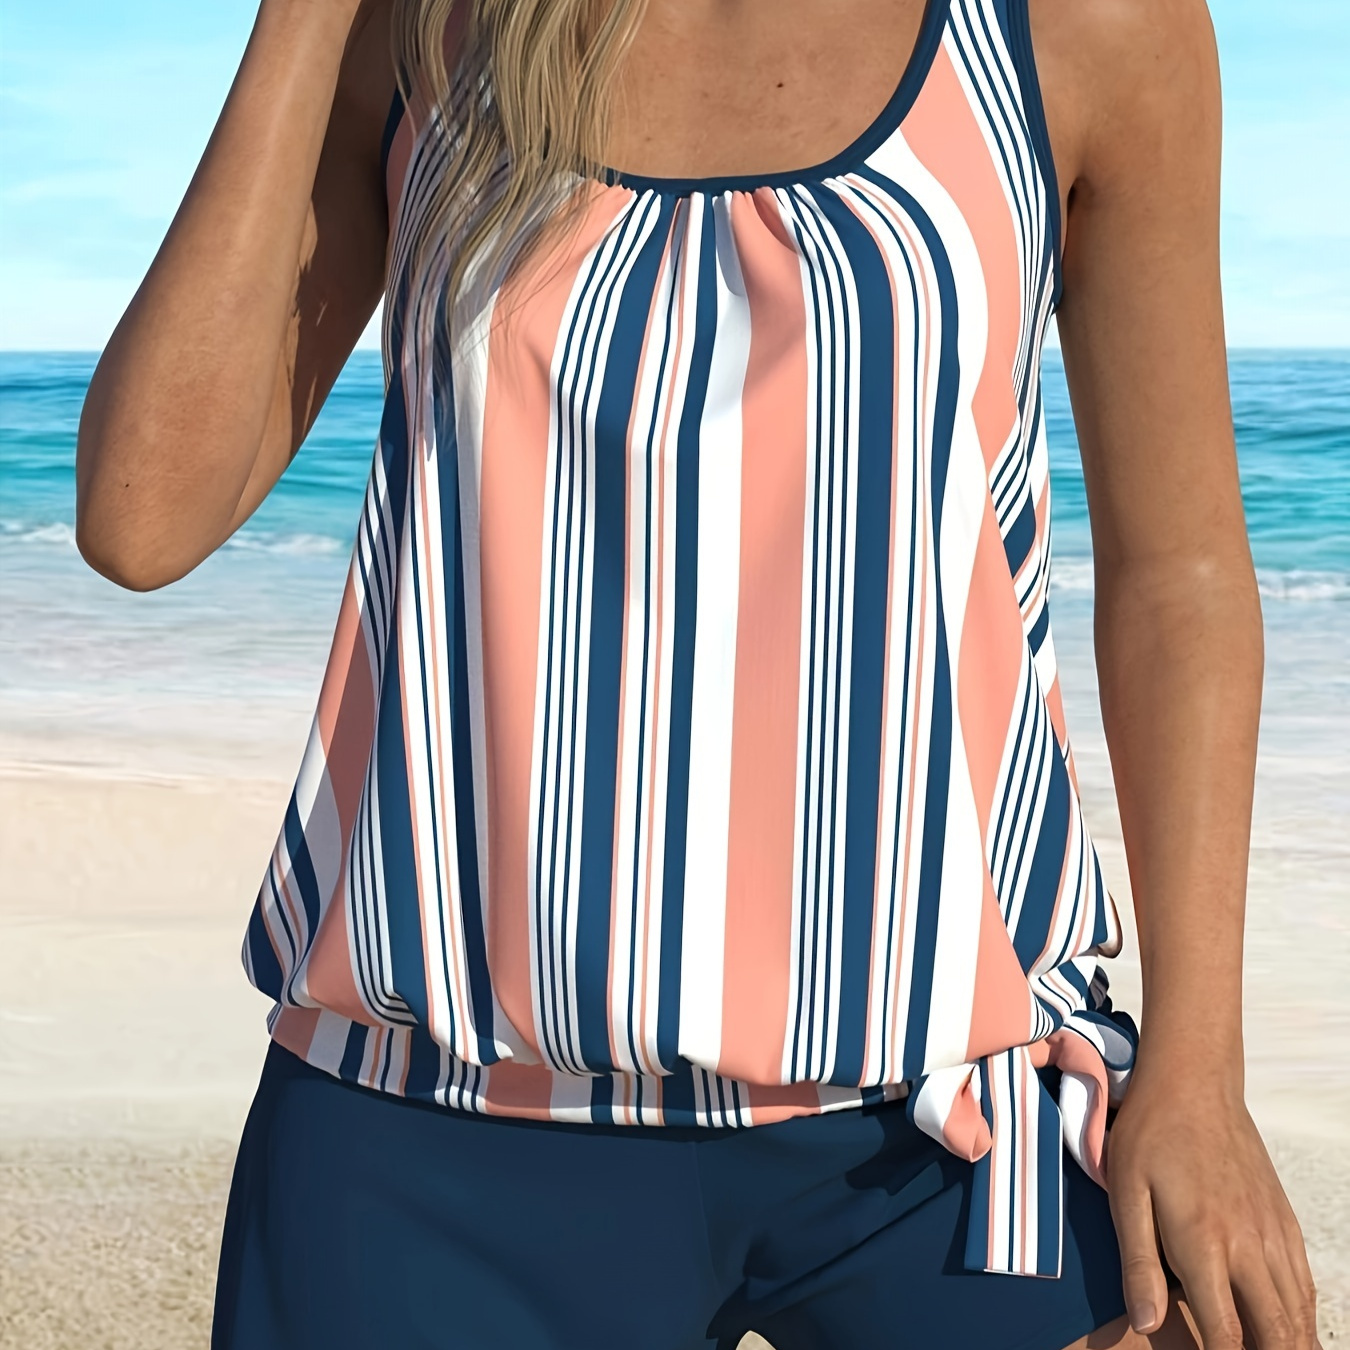 

Women's Striped 2 Piece Tankini Swimwear, Scoop Neck Sleeveless Top With Side Tie, Navy Blue Boyshorts Bottoms, Summer Beachwear